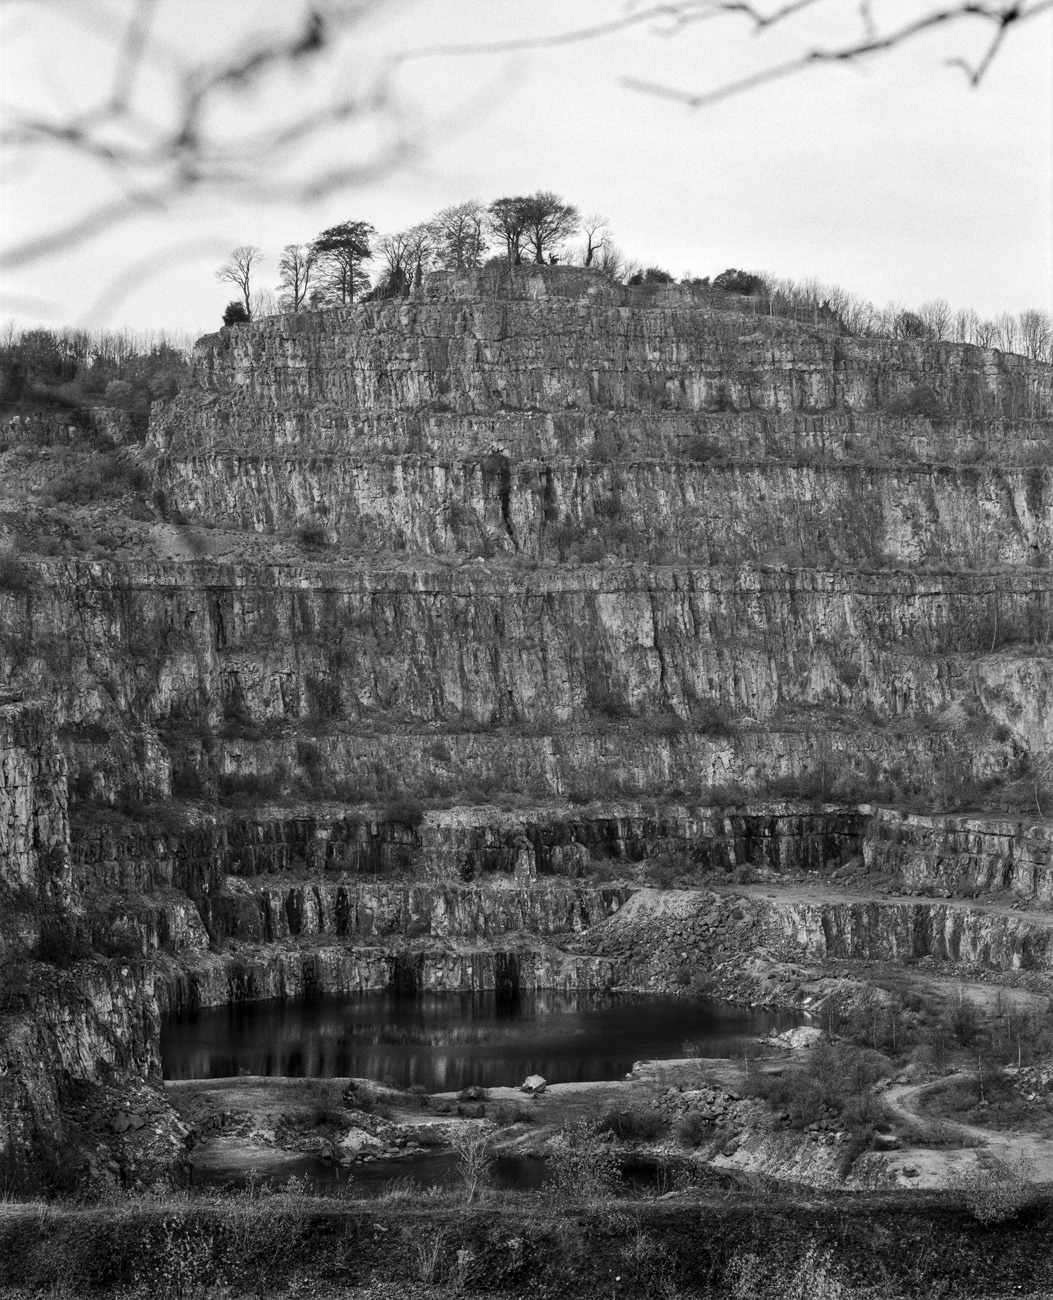 6x7 Analogue black and white ILFORD medium format quarry rocks texture